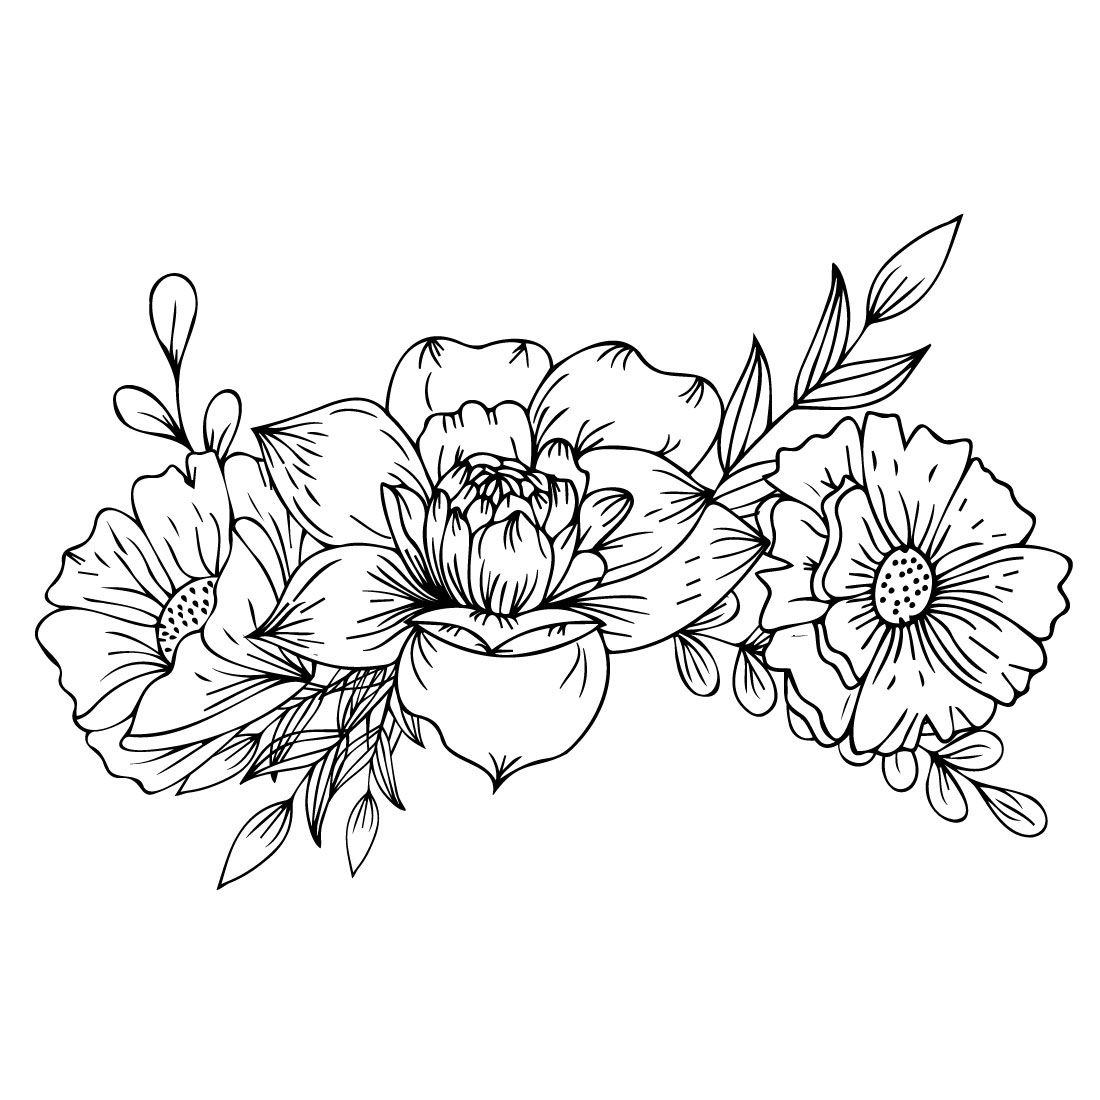 Flower Arrangement Images For Drawing | Best Flower Site